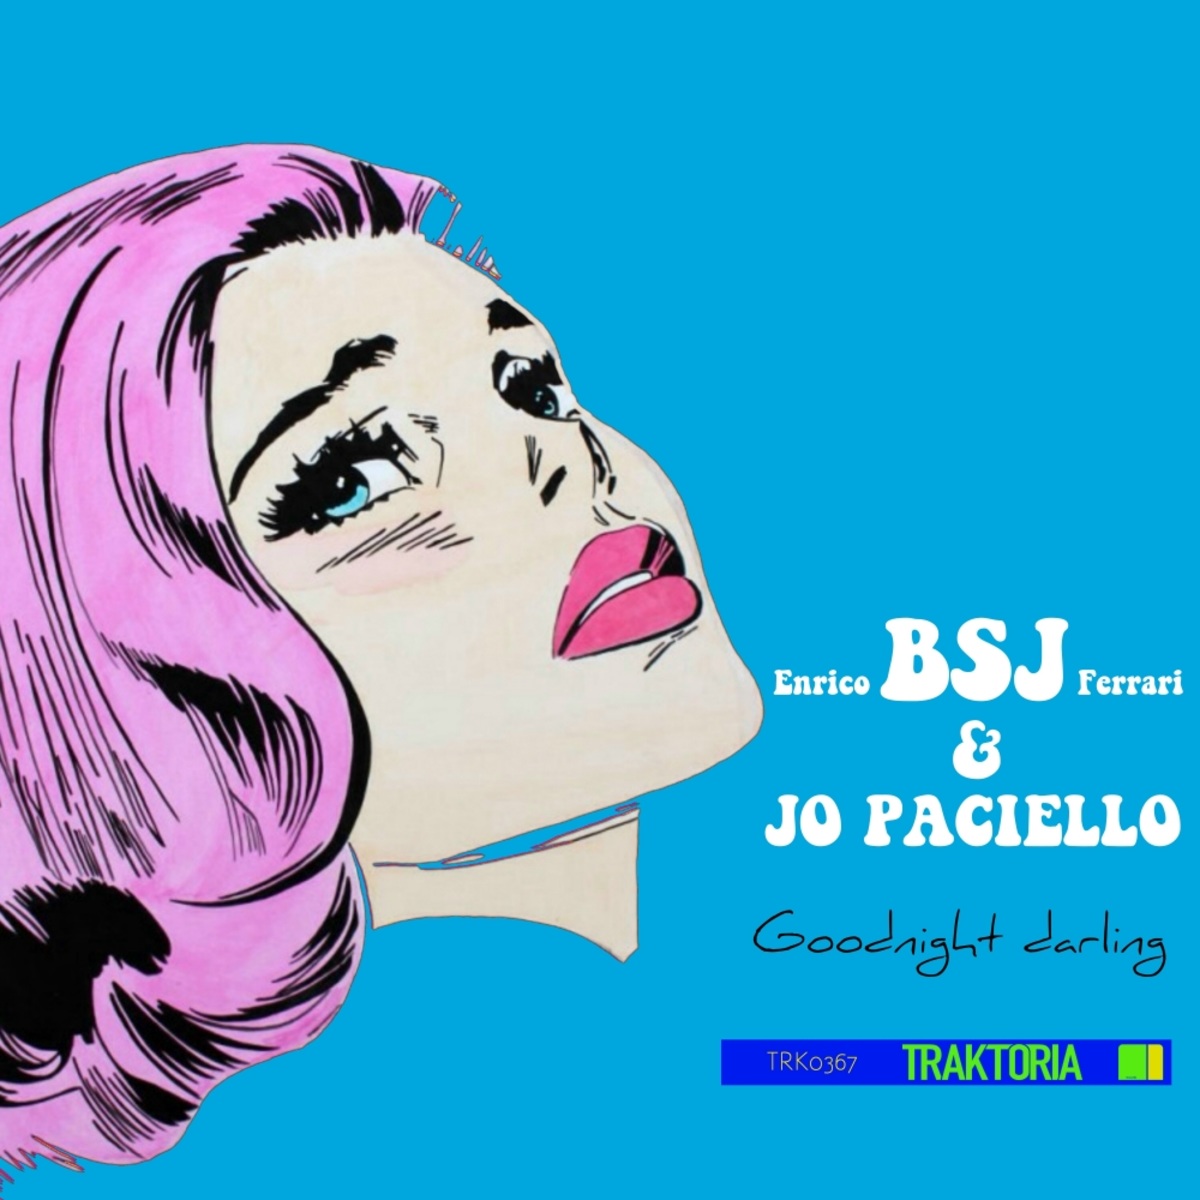 Enrico BSJ Ferrari & Jo Paciello - Goodnight Darling / Traktoria